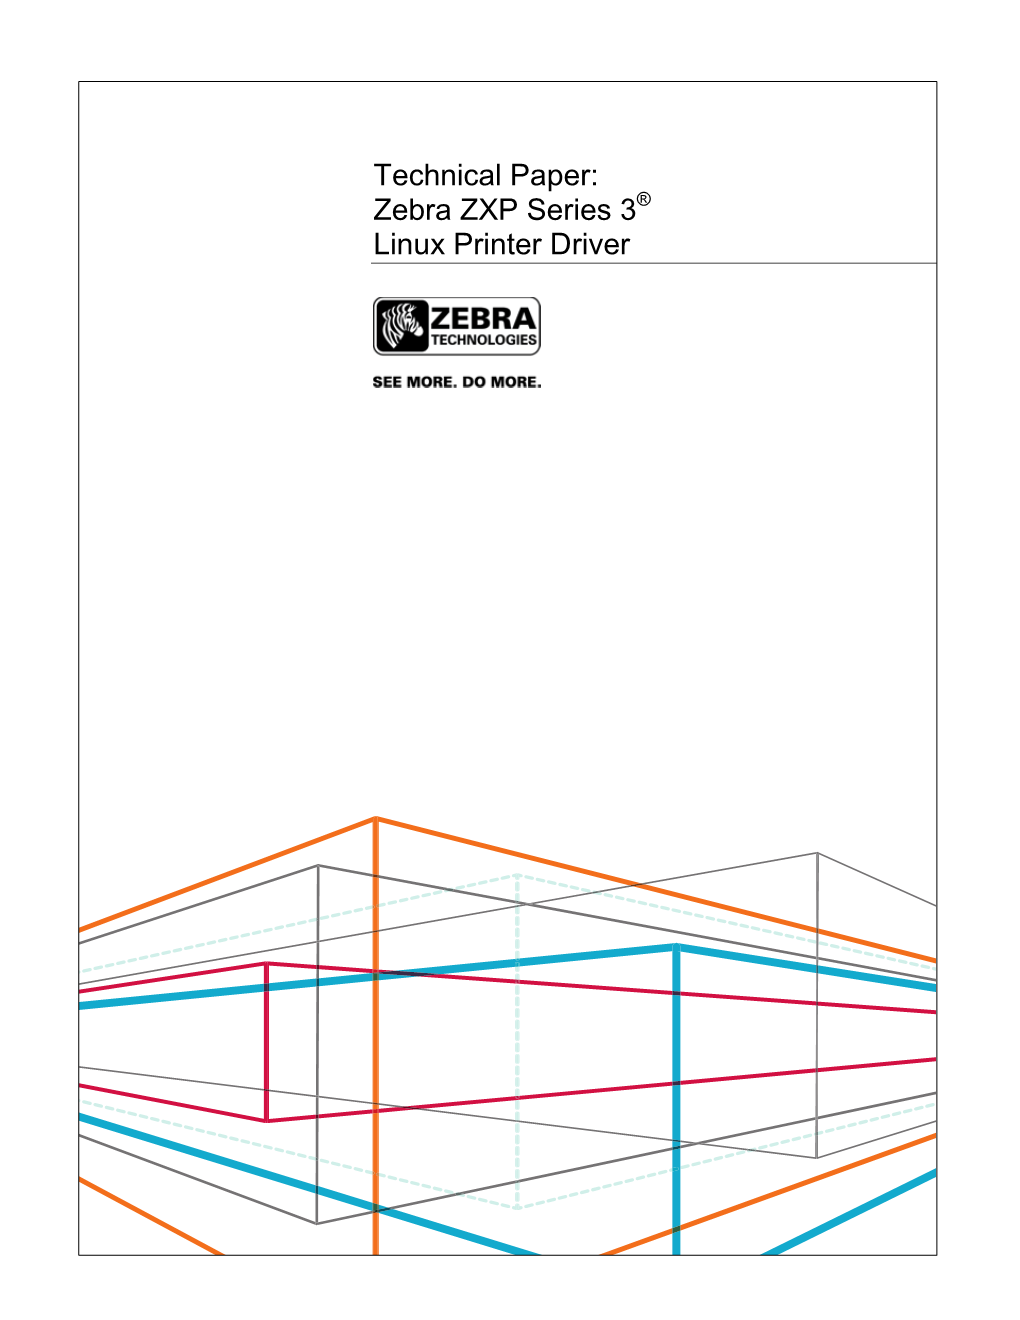 Technical Paper: Zebra ZXP Series 3 Linux Printer Driver